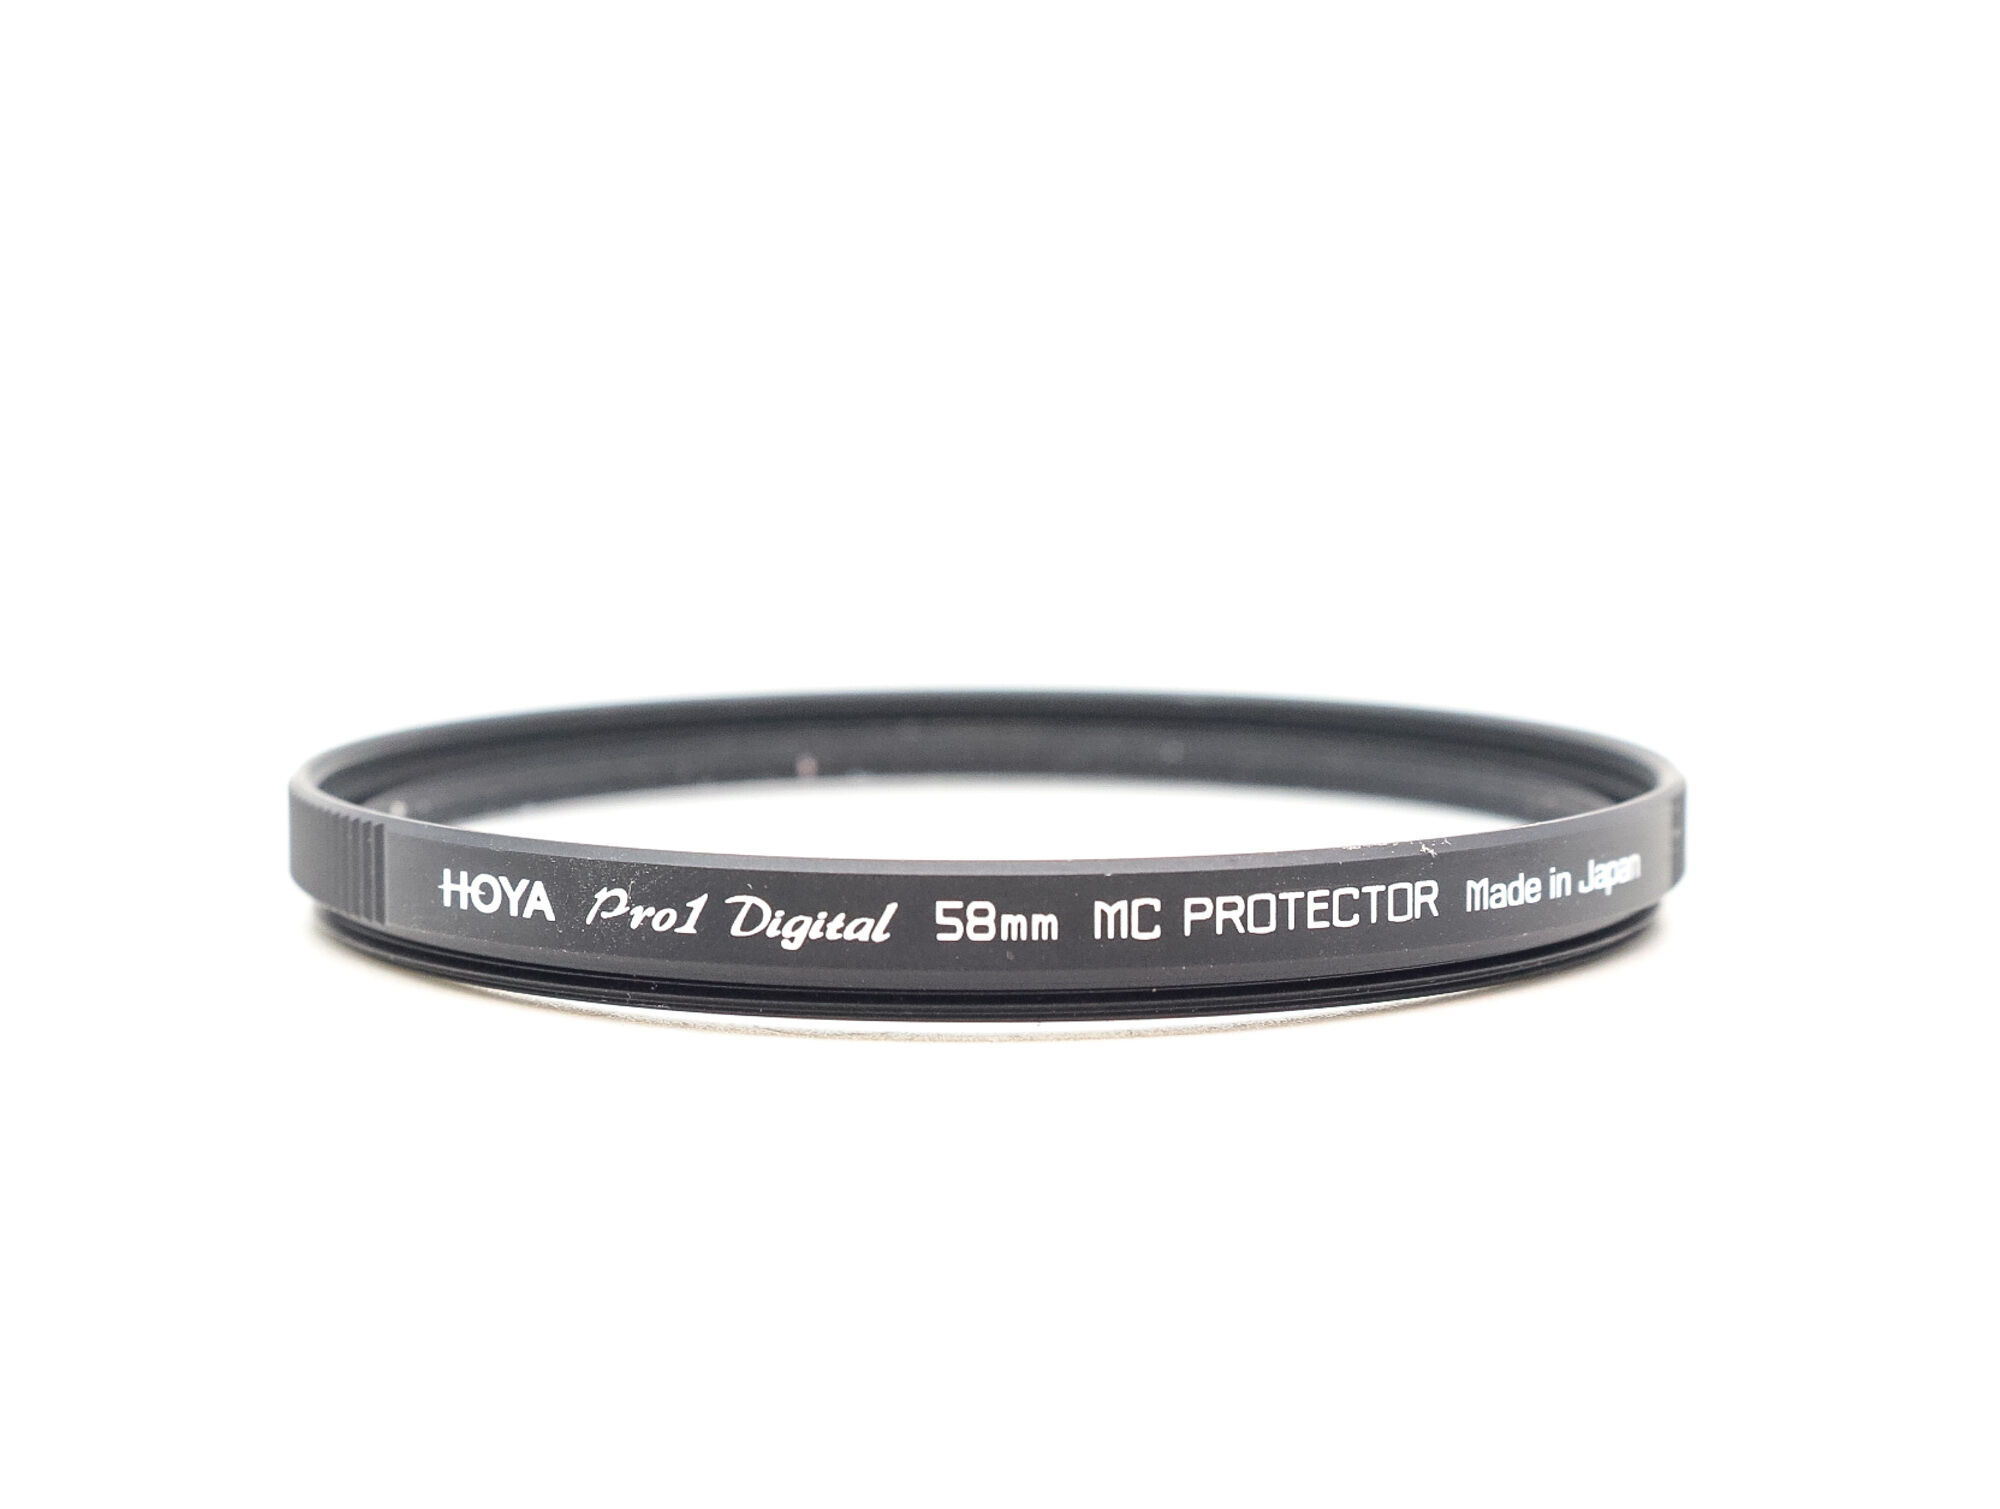 Hoya 58mm Pro 1 Digital Protector Filter (Condition: Good)